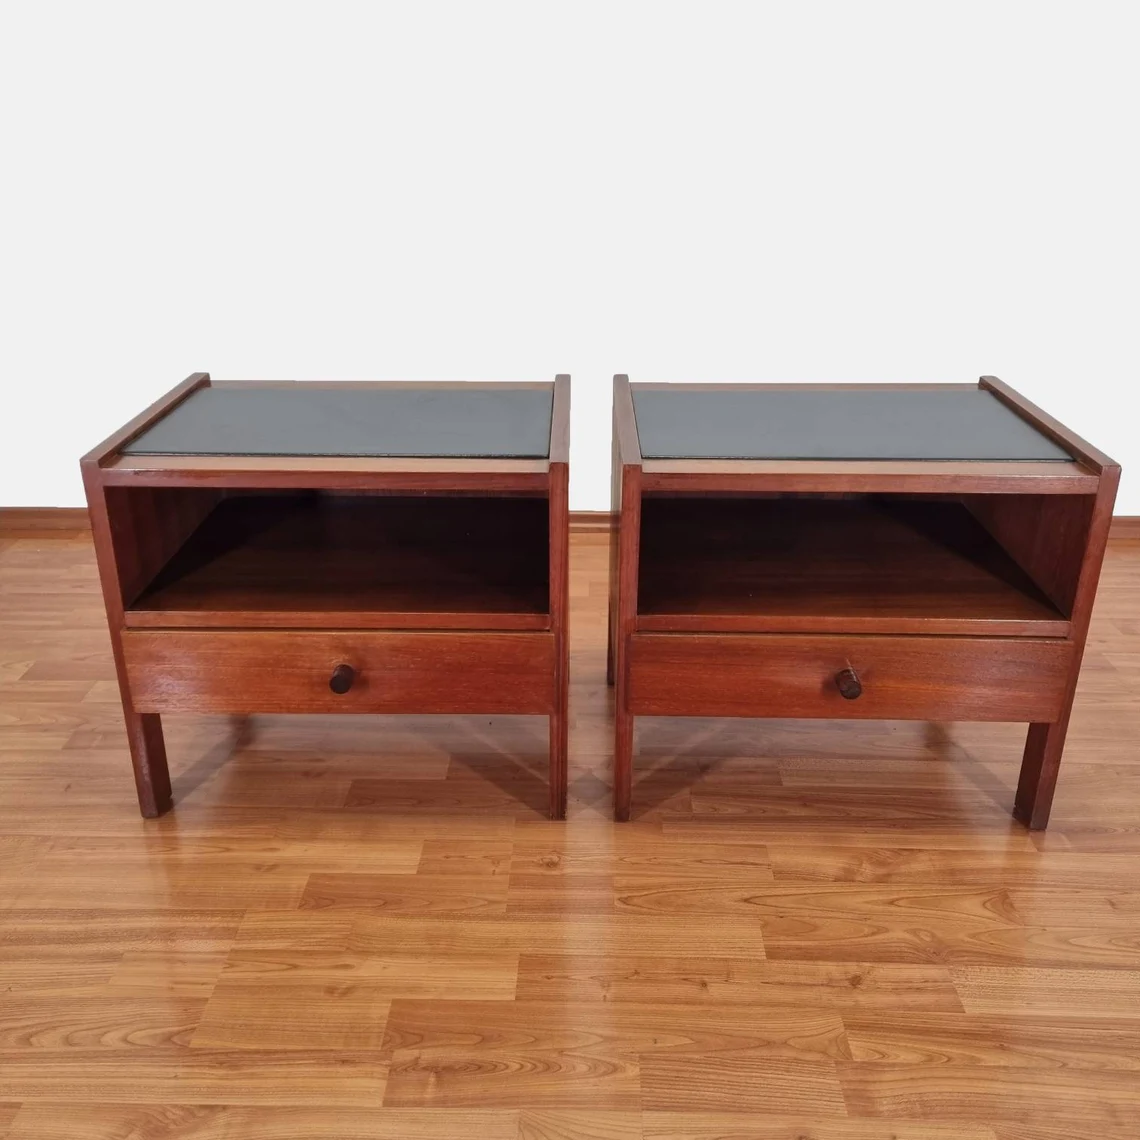 Pair Of Vintage Nightstands, Mid Century Modern Bedside Tables, 80s Nightstands